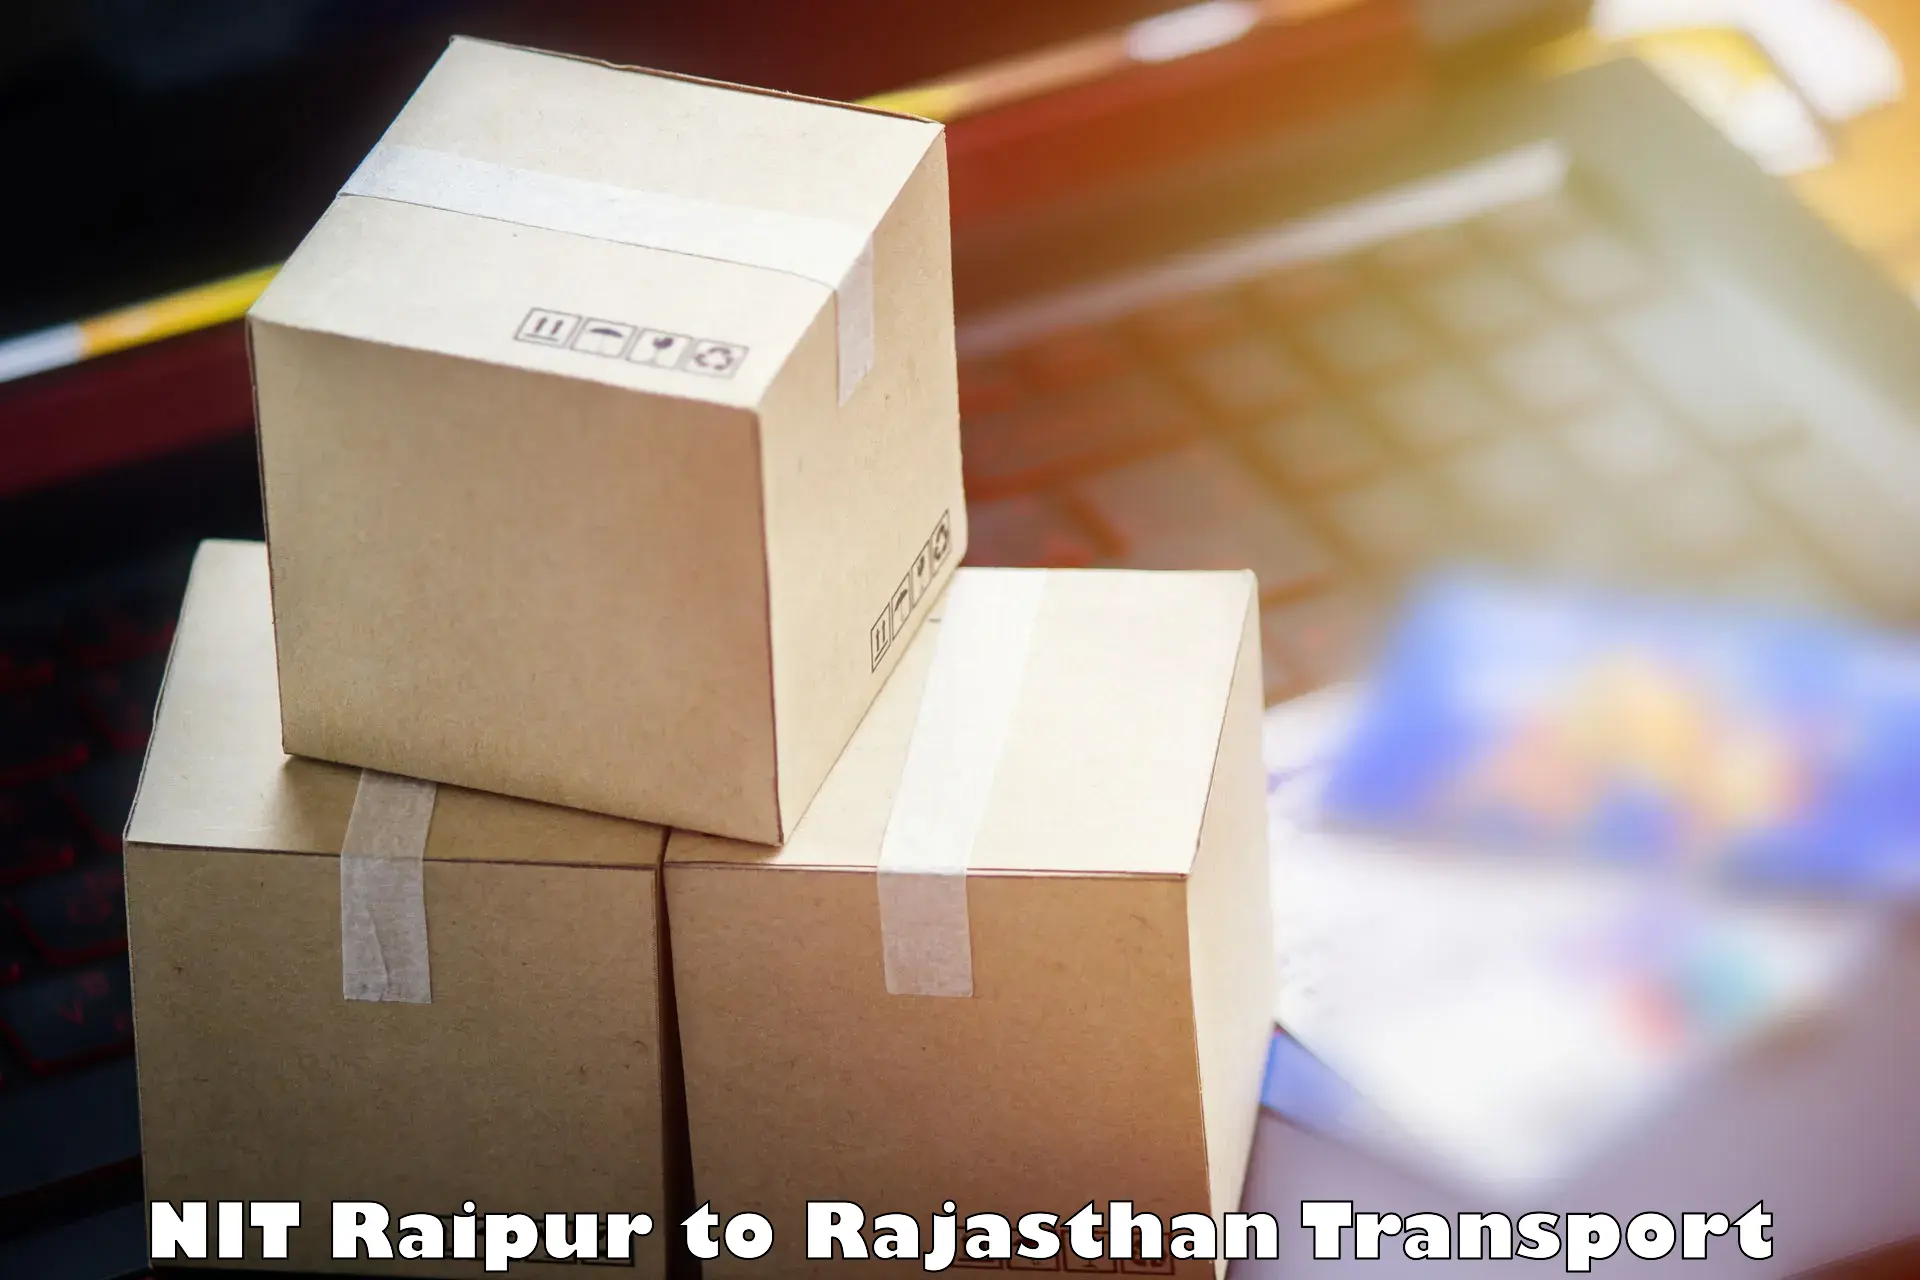 Nearby transport service NIT Raipur to Jhalawar